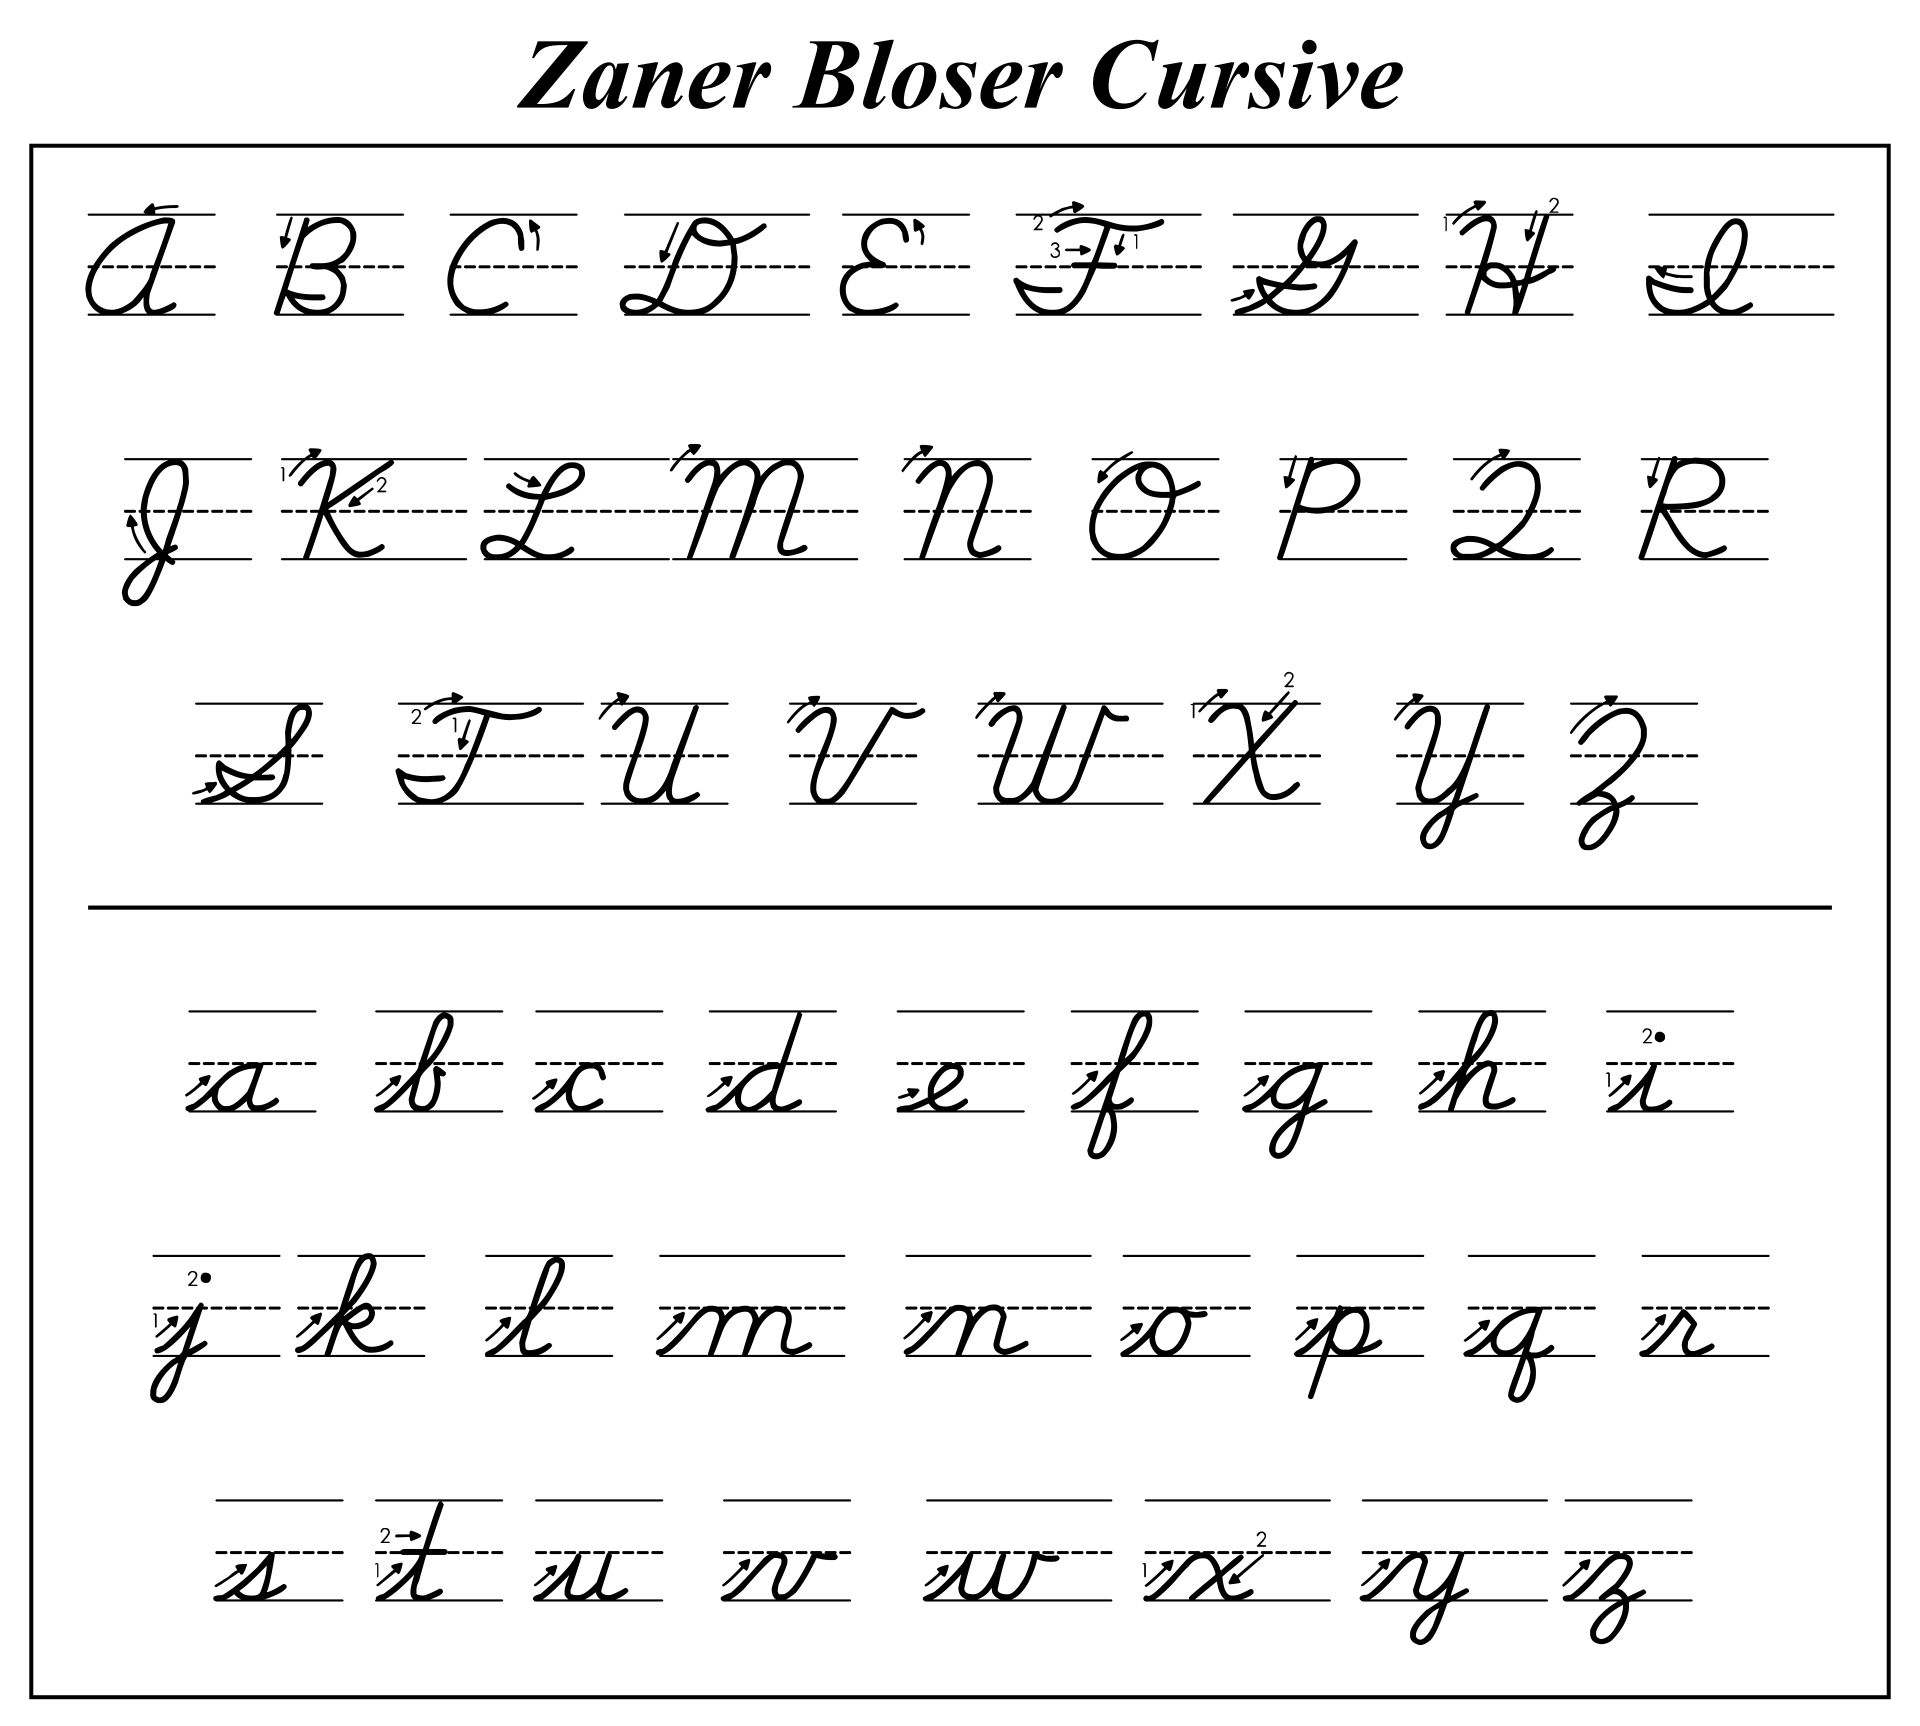 7 Best Images of Zaner-Bloser Handwriting Chart Printable - Printable ...